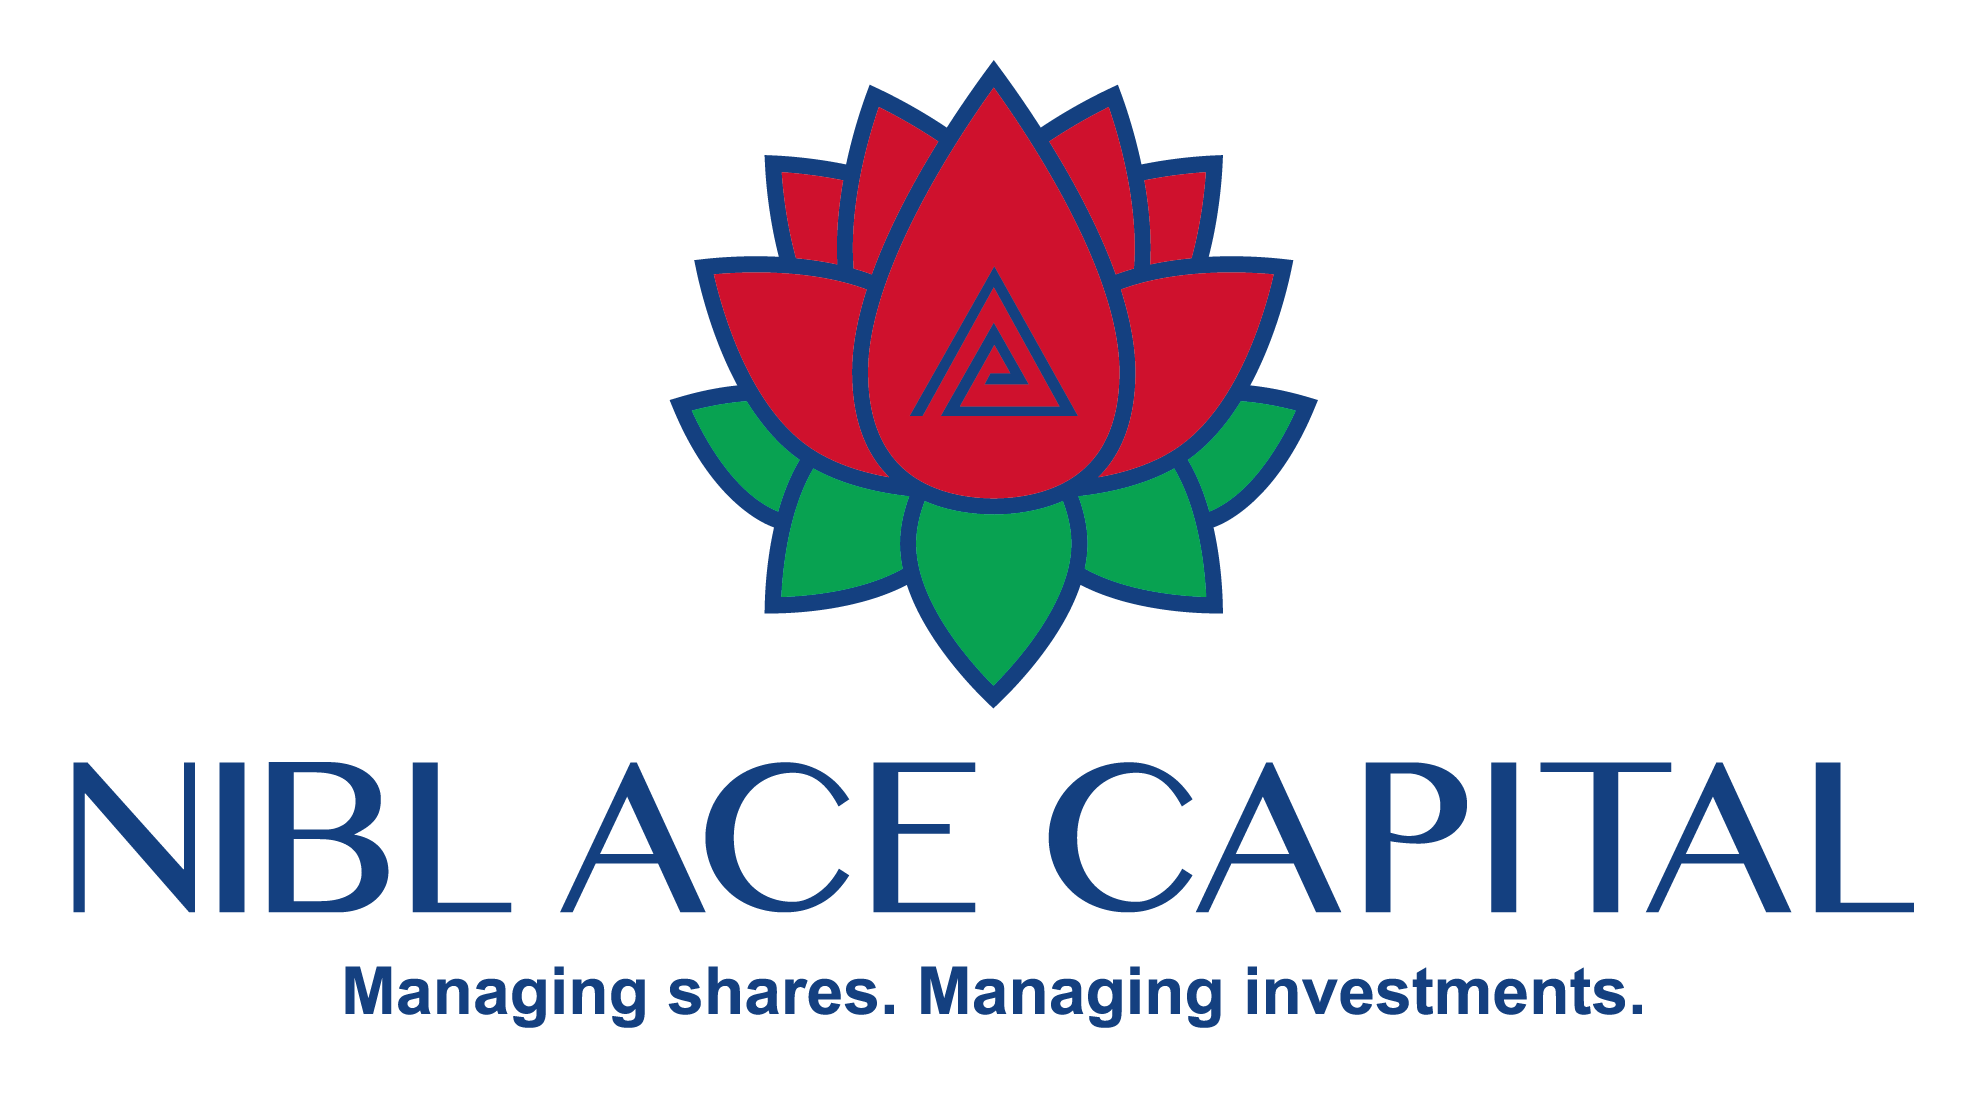 NIBL Ace Capital is FPO guarantor of Samata Microfinance